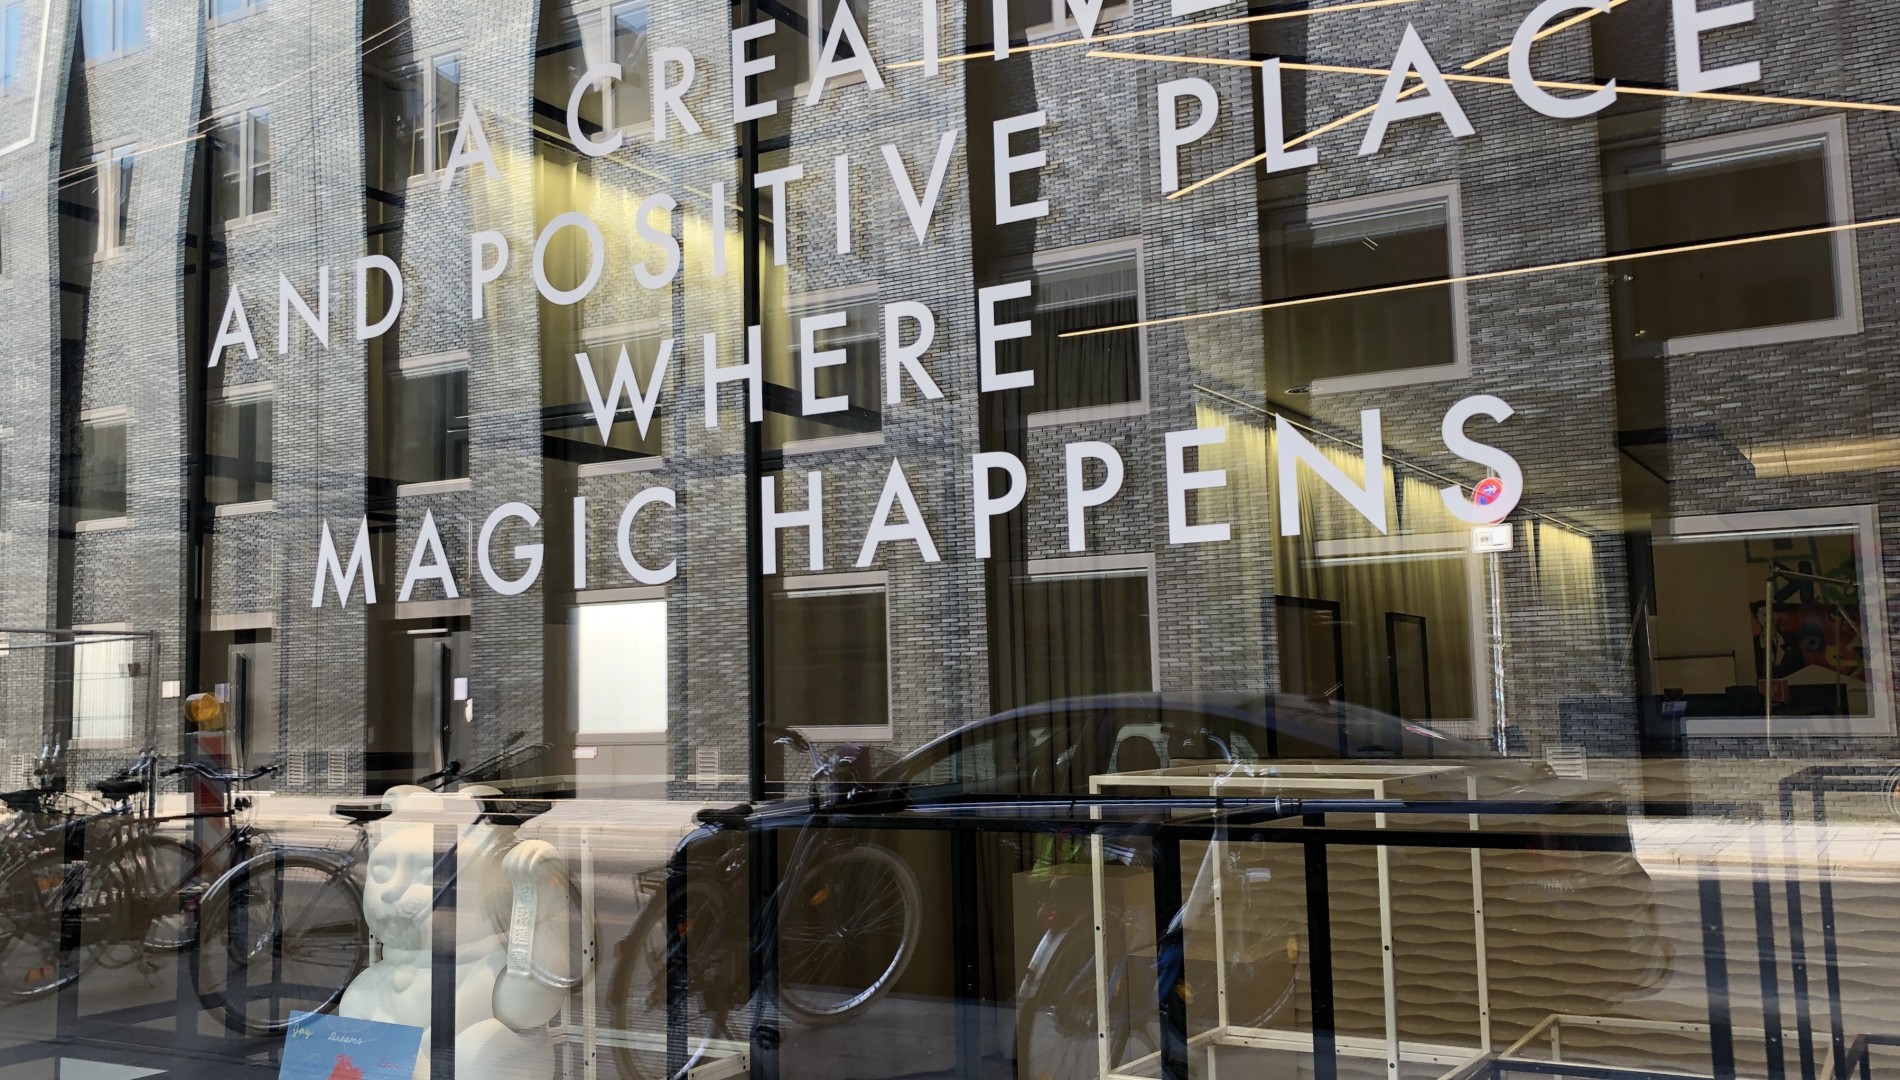 Büro der Designagentur das formt in München - Creative and positive place where magic happens.